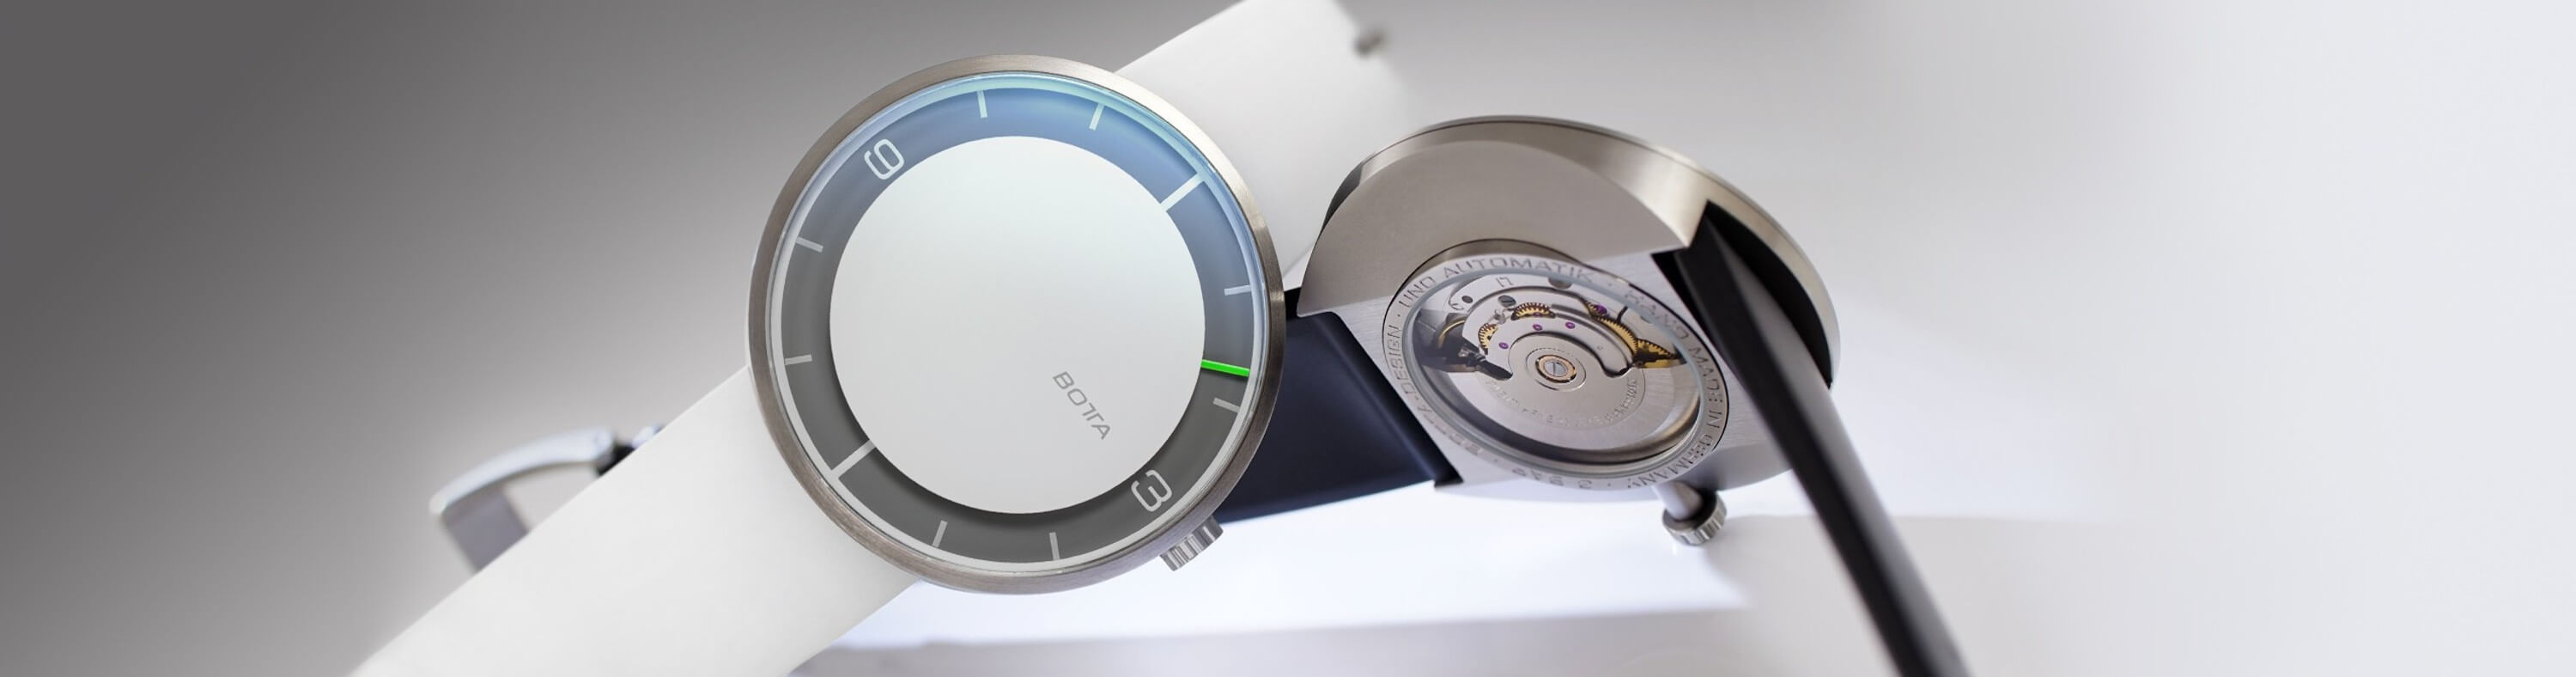 NOVA Plus Automatic Alpin watch